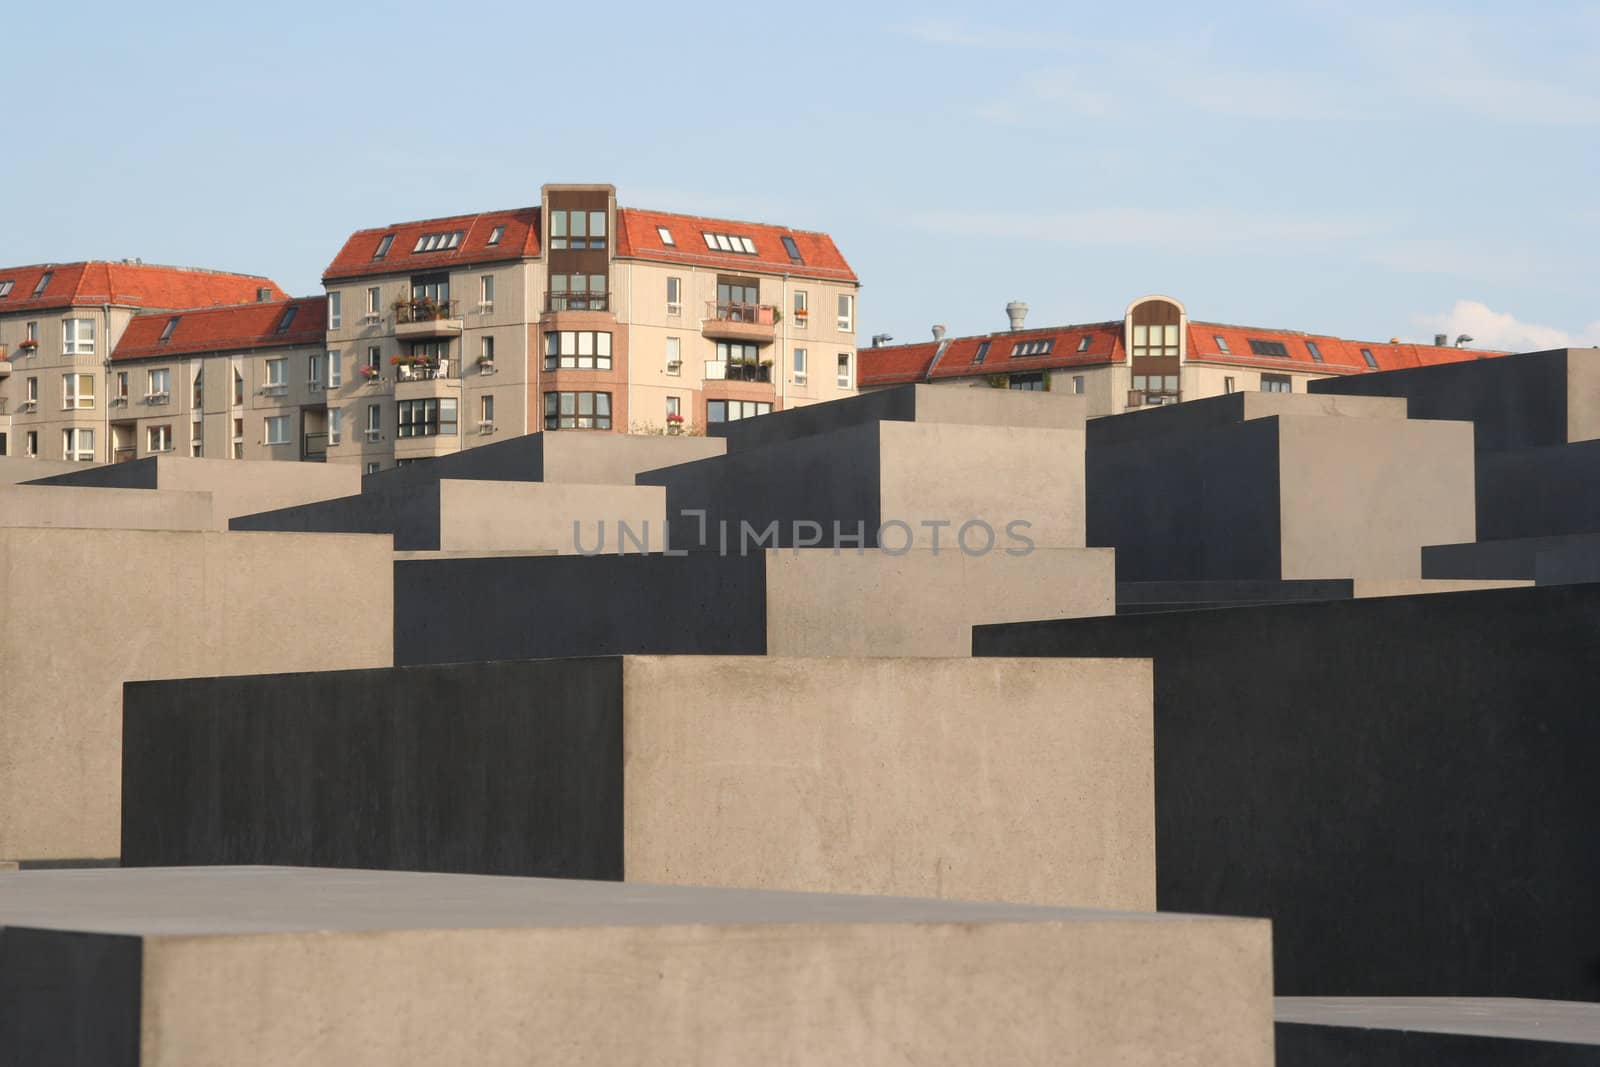 Holocaust Memorial in Berlin by JanKranendonk